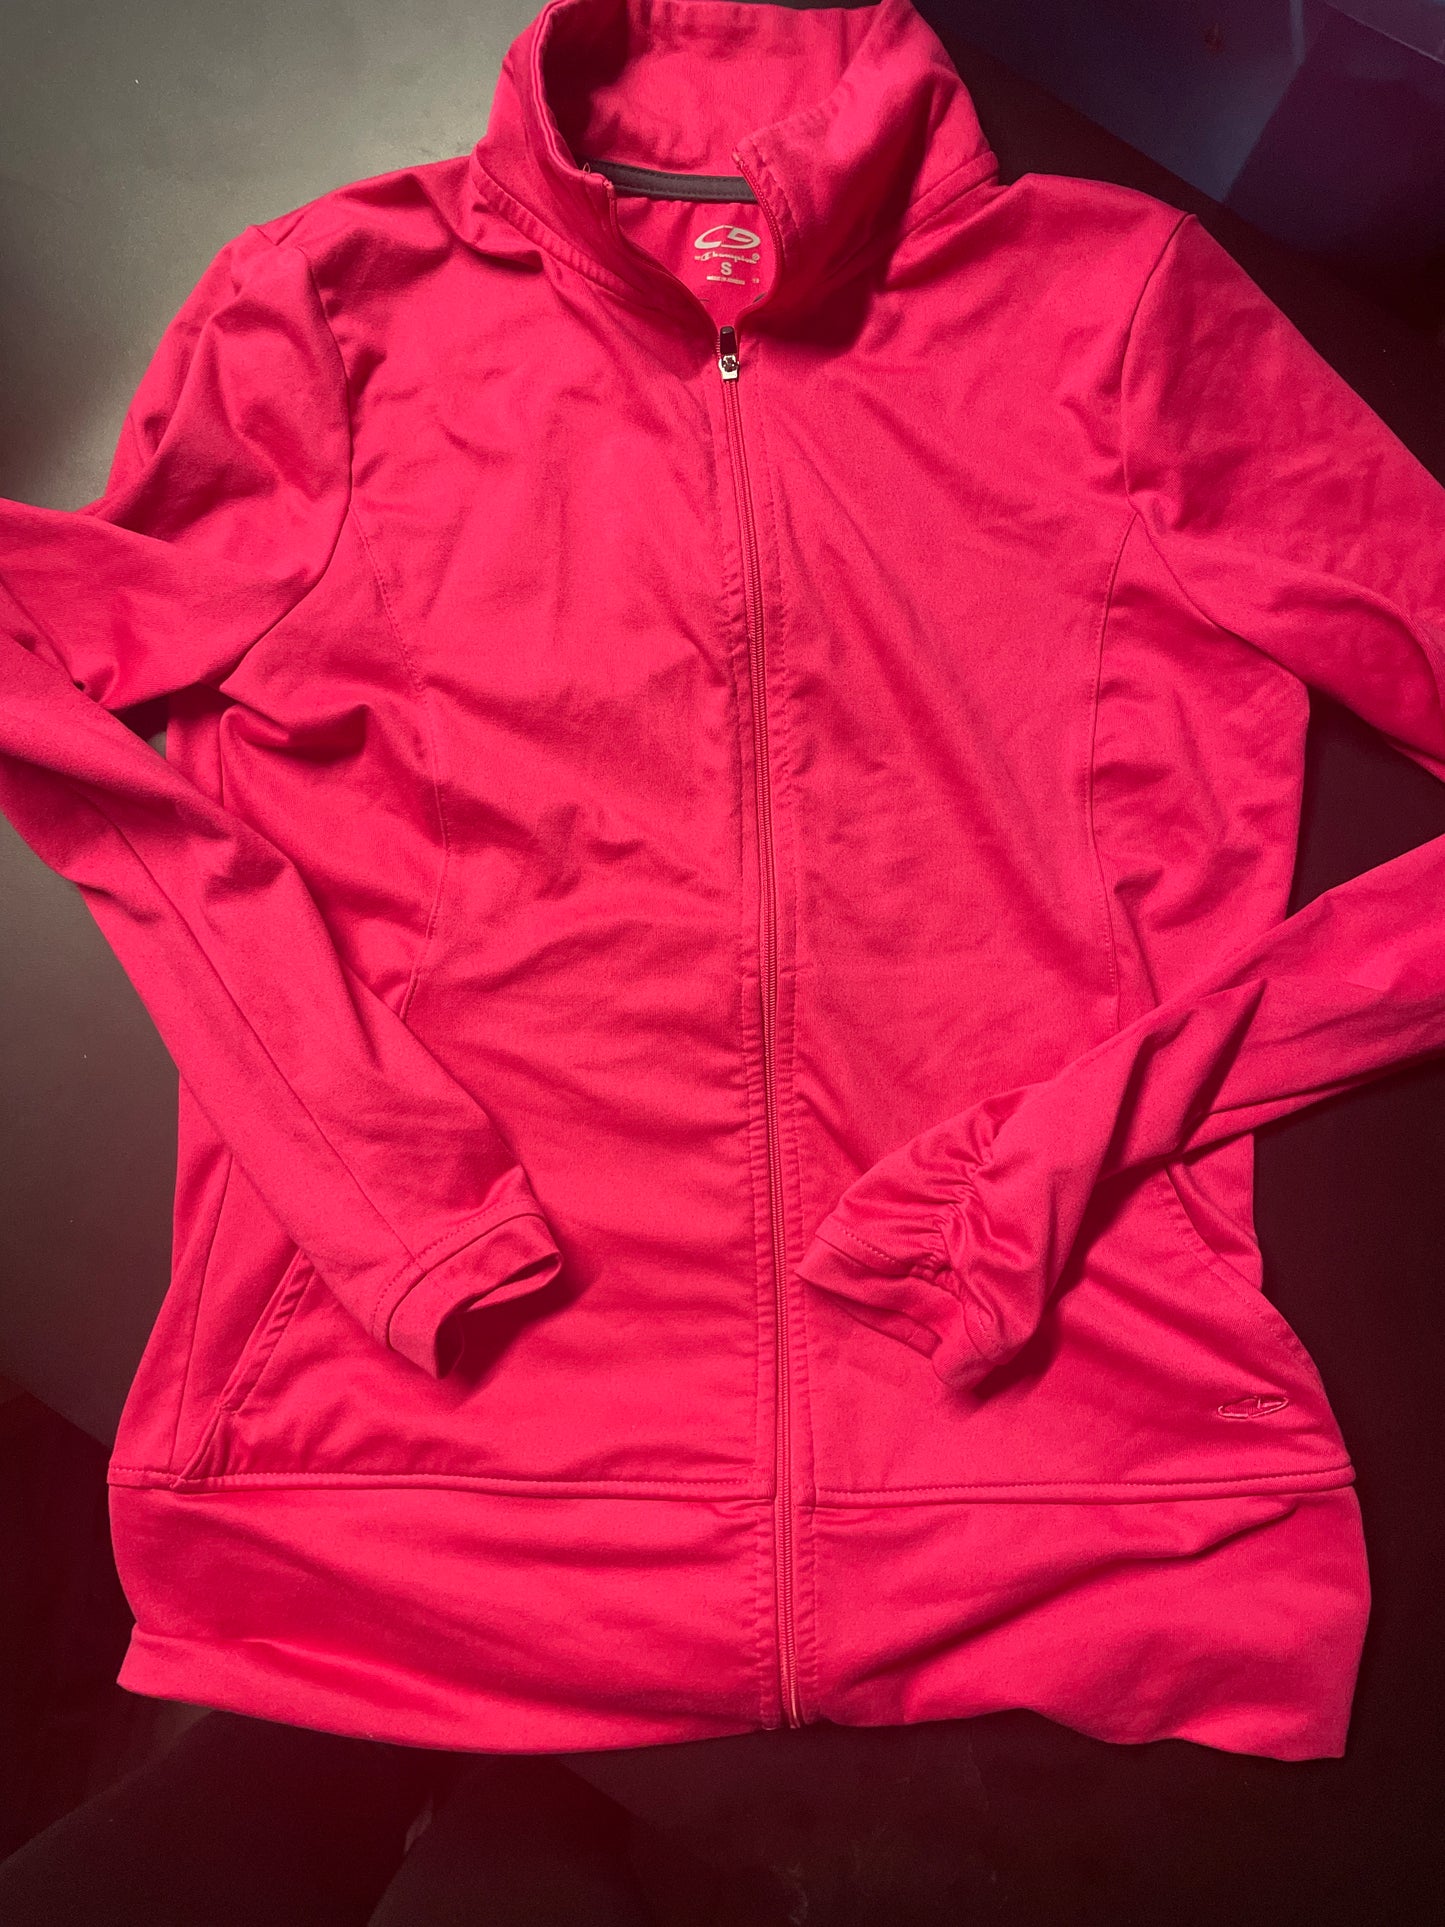 Women’s small full zip pink workout jacket